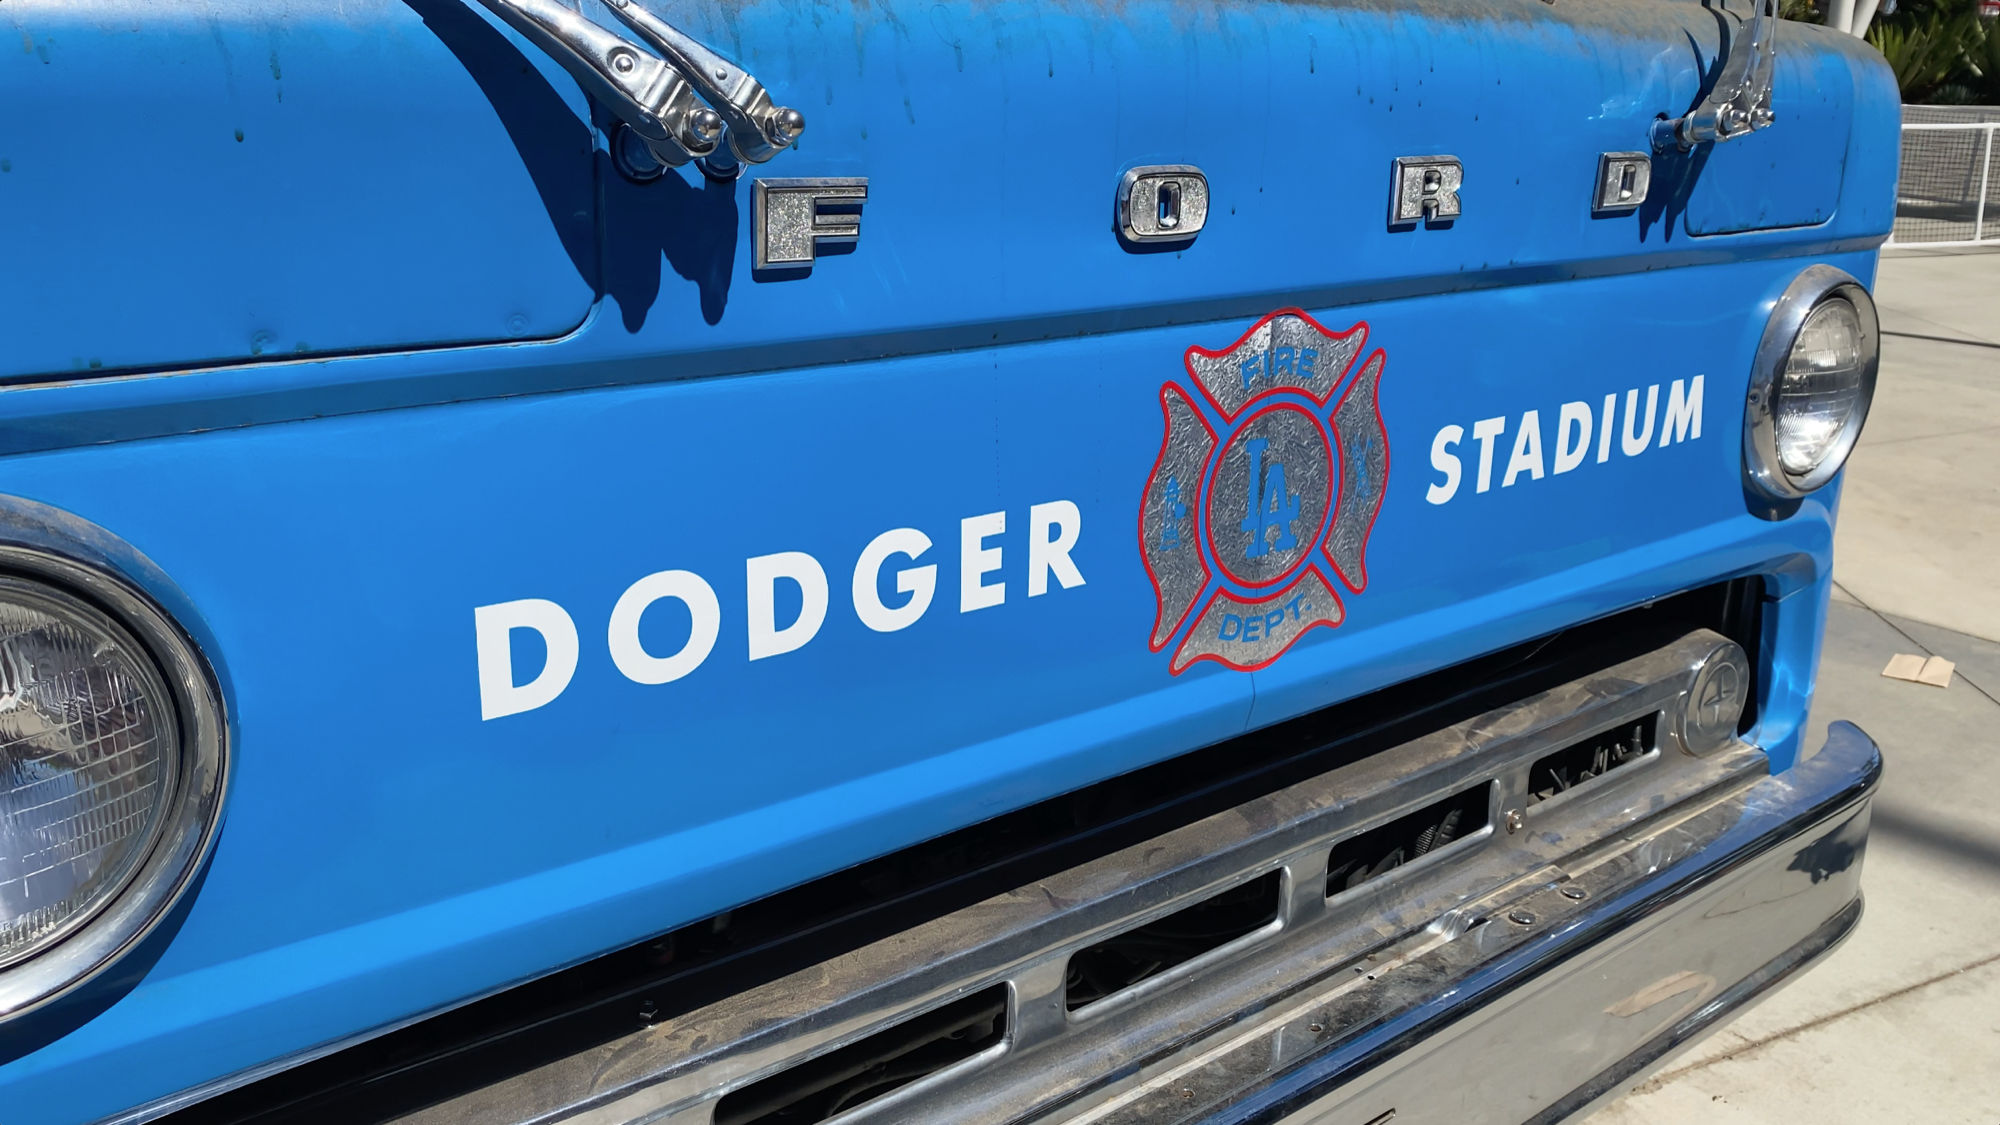 Dodger Stadium Fire Engine Beer Booth